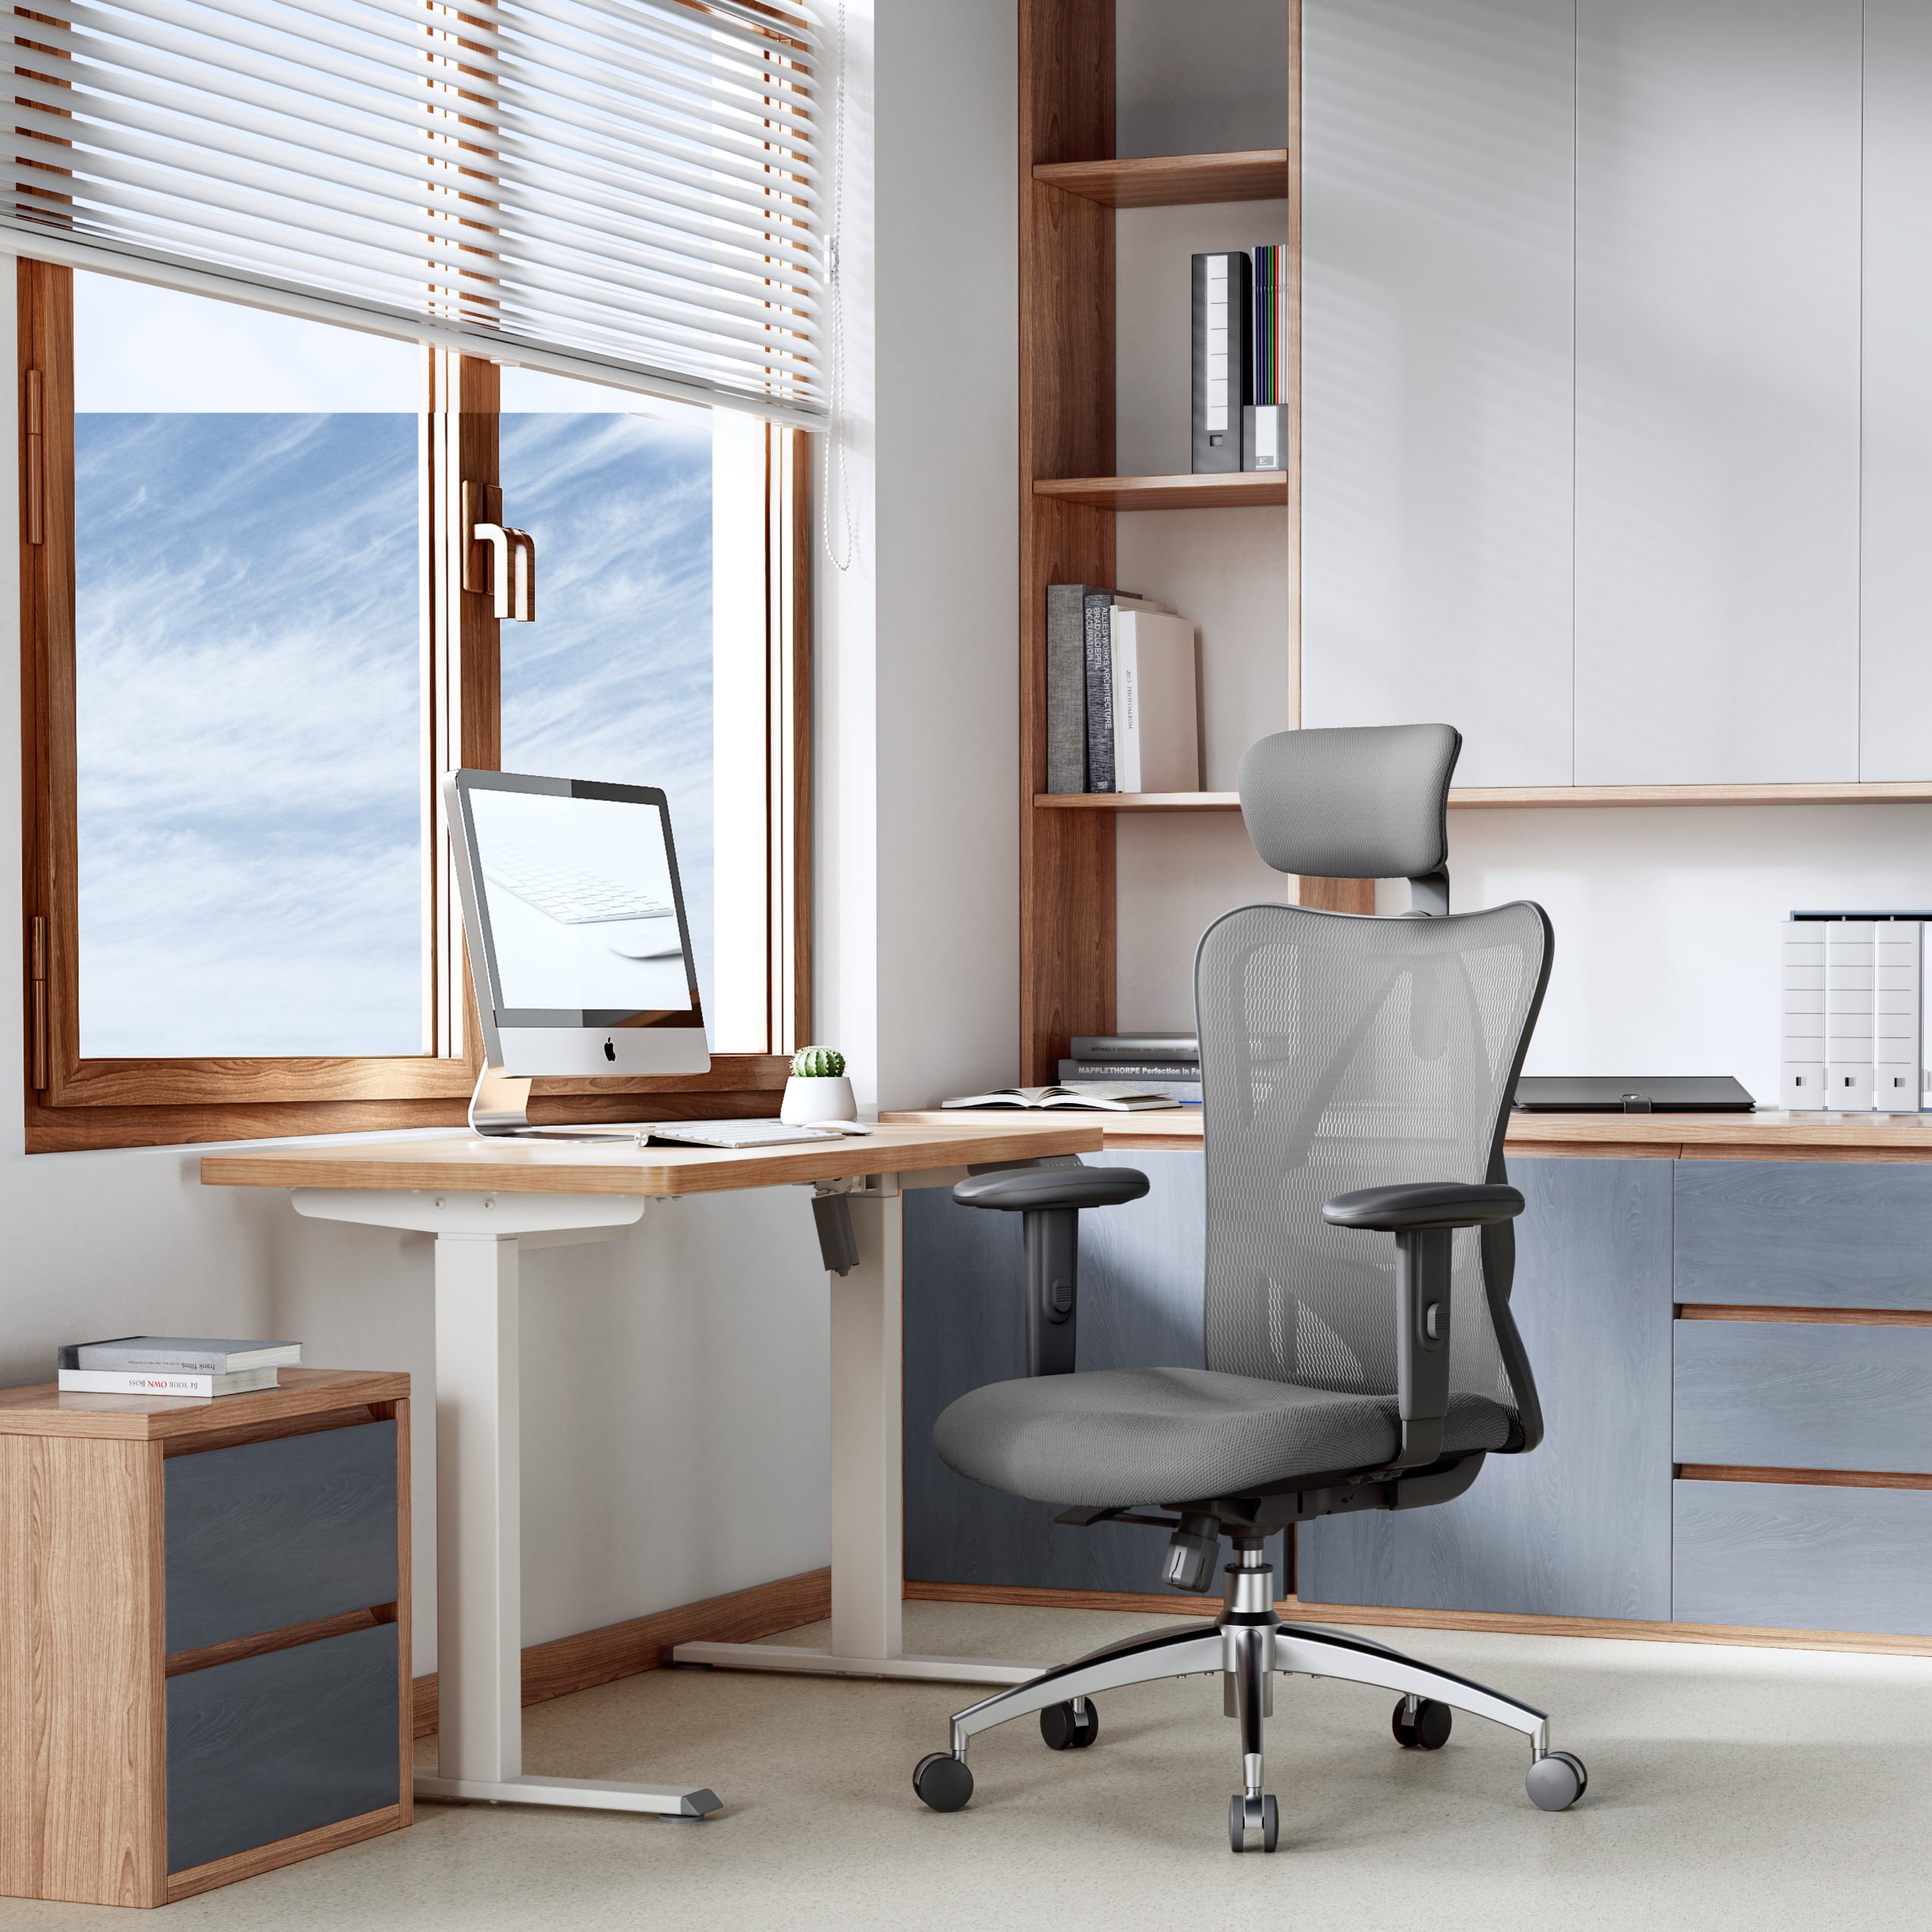 SIHOO Ergonomic High Back Office Chair, Adjustable Computer Desk